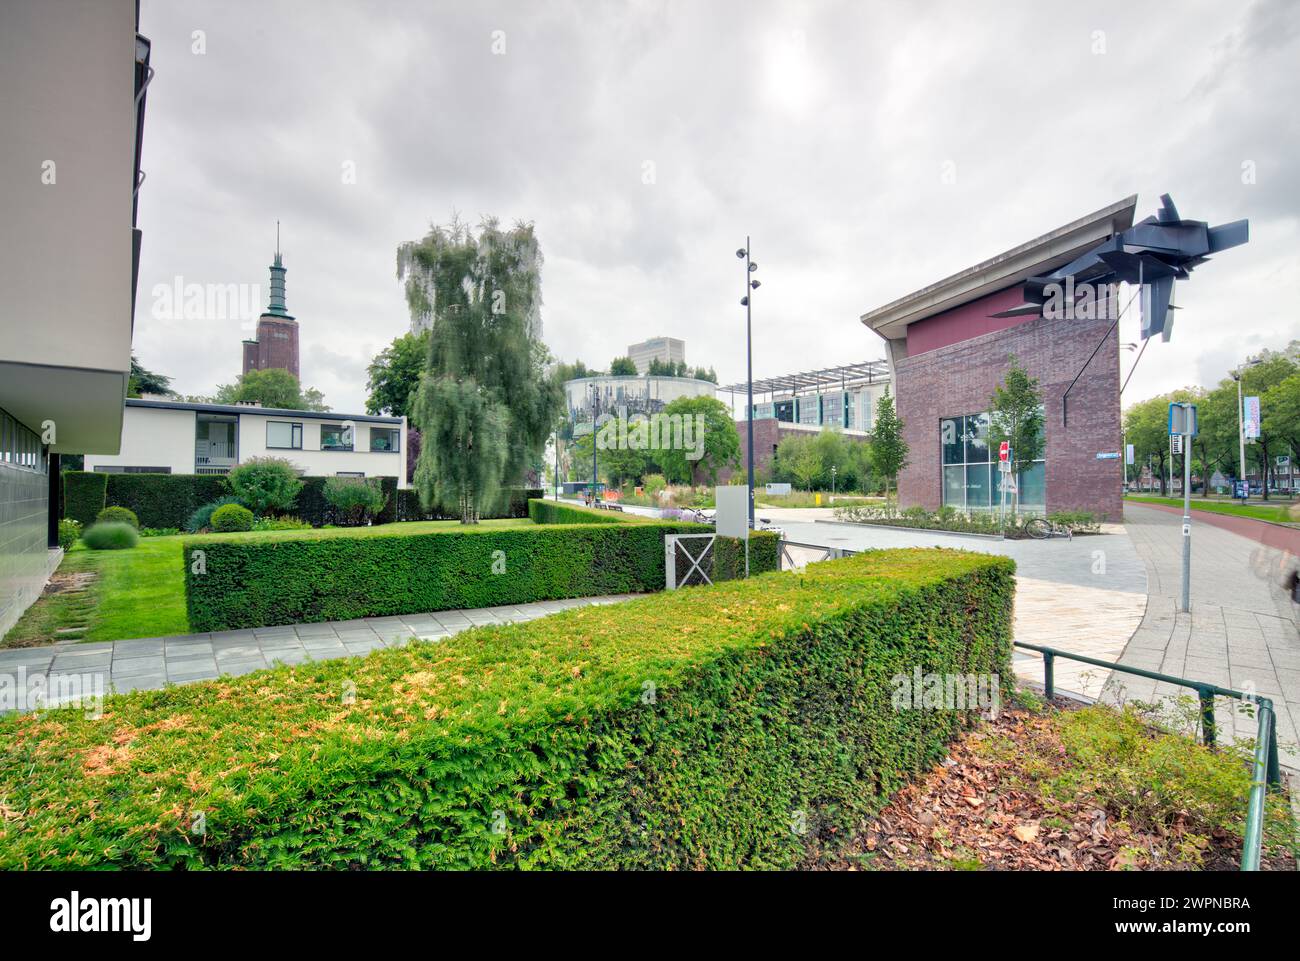 Museumwoning Huis Sonneveld, Museumpark, house facade, architecture, site view, Rotterdam, Netherlands, Stock Photo